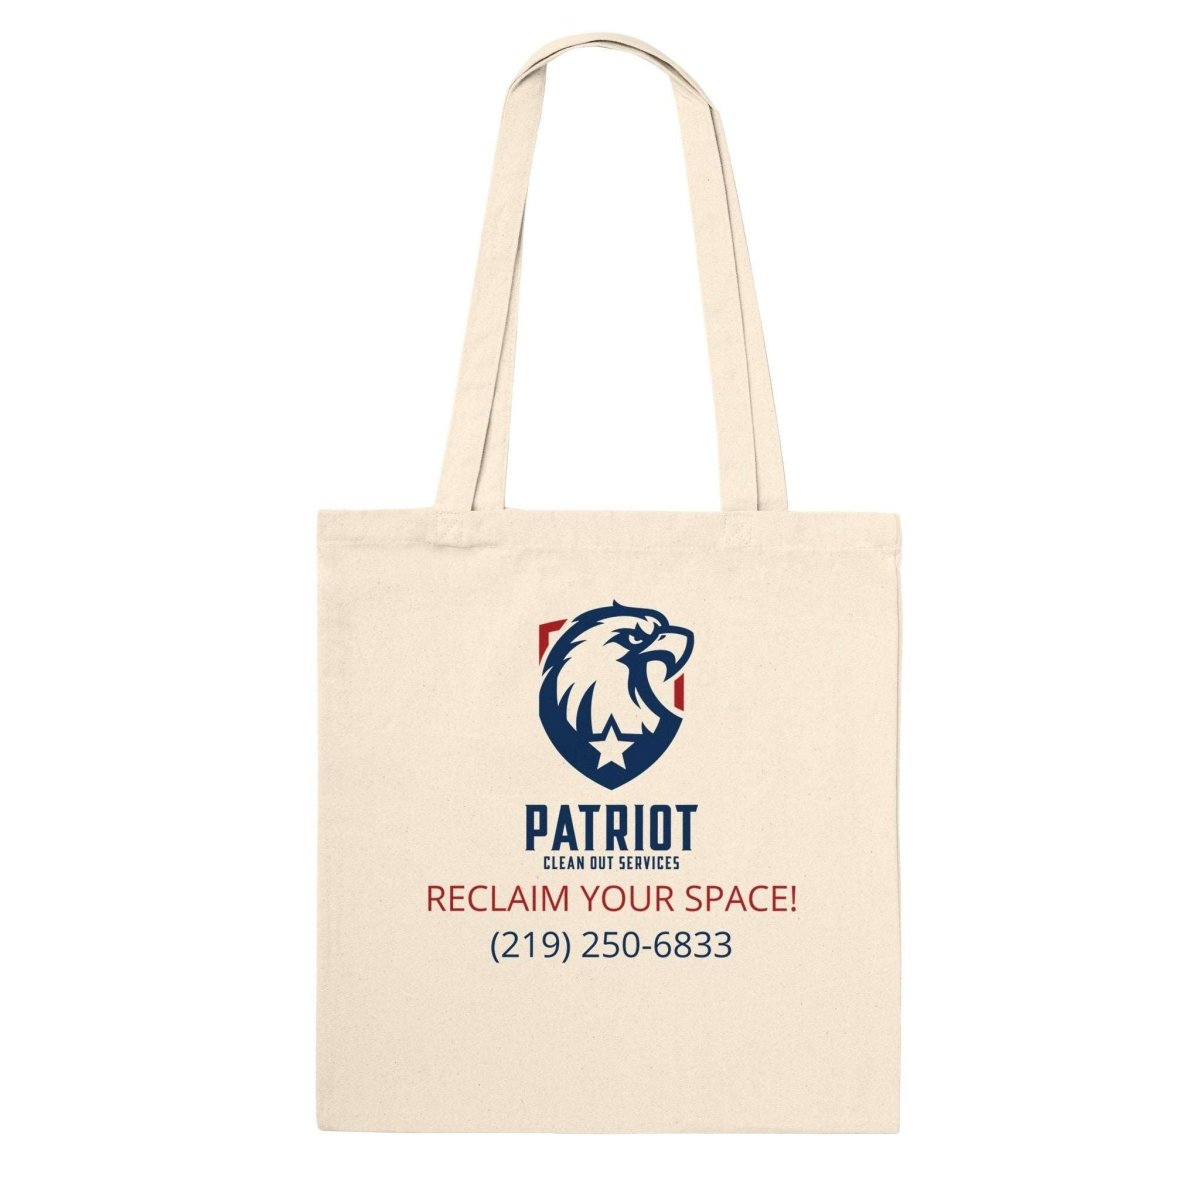 Patriotic Tote Bag with Patriot Clean Out Logo and long handles - Print Material - Natural